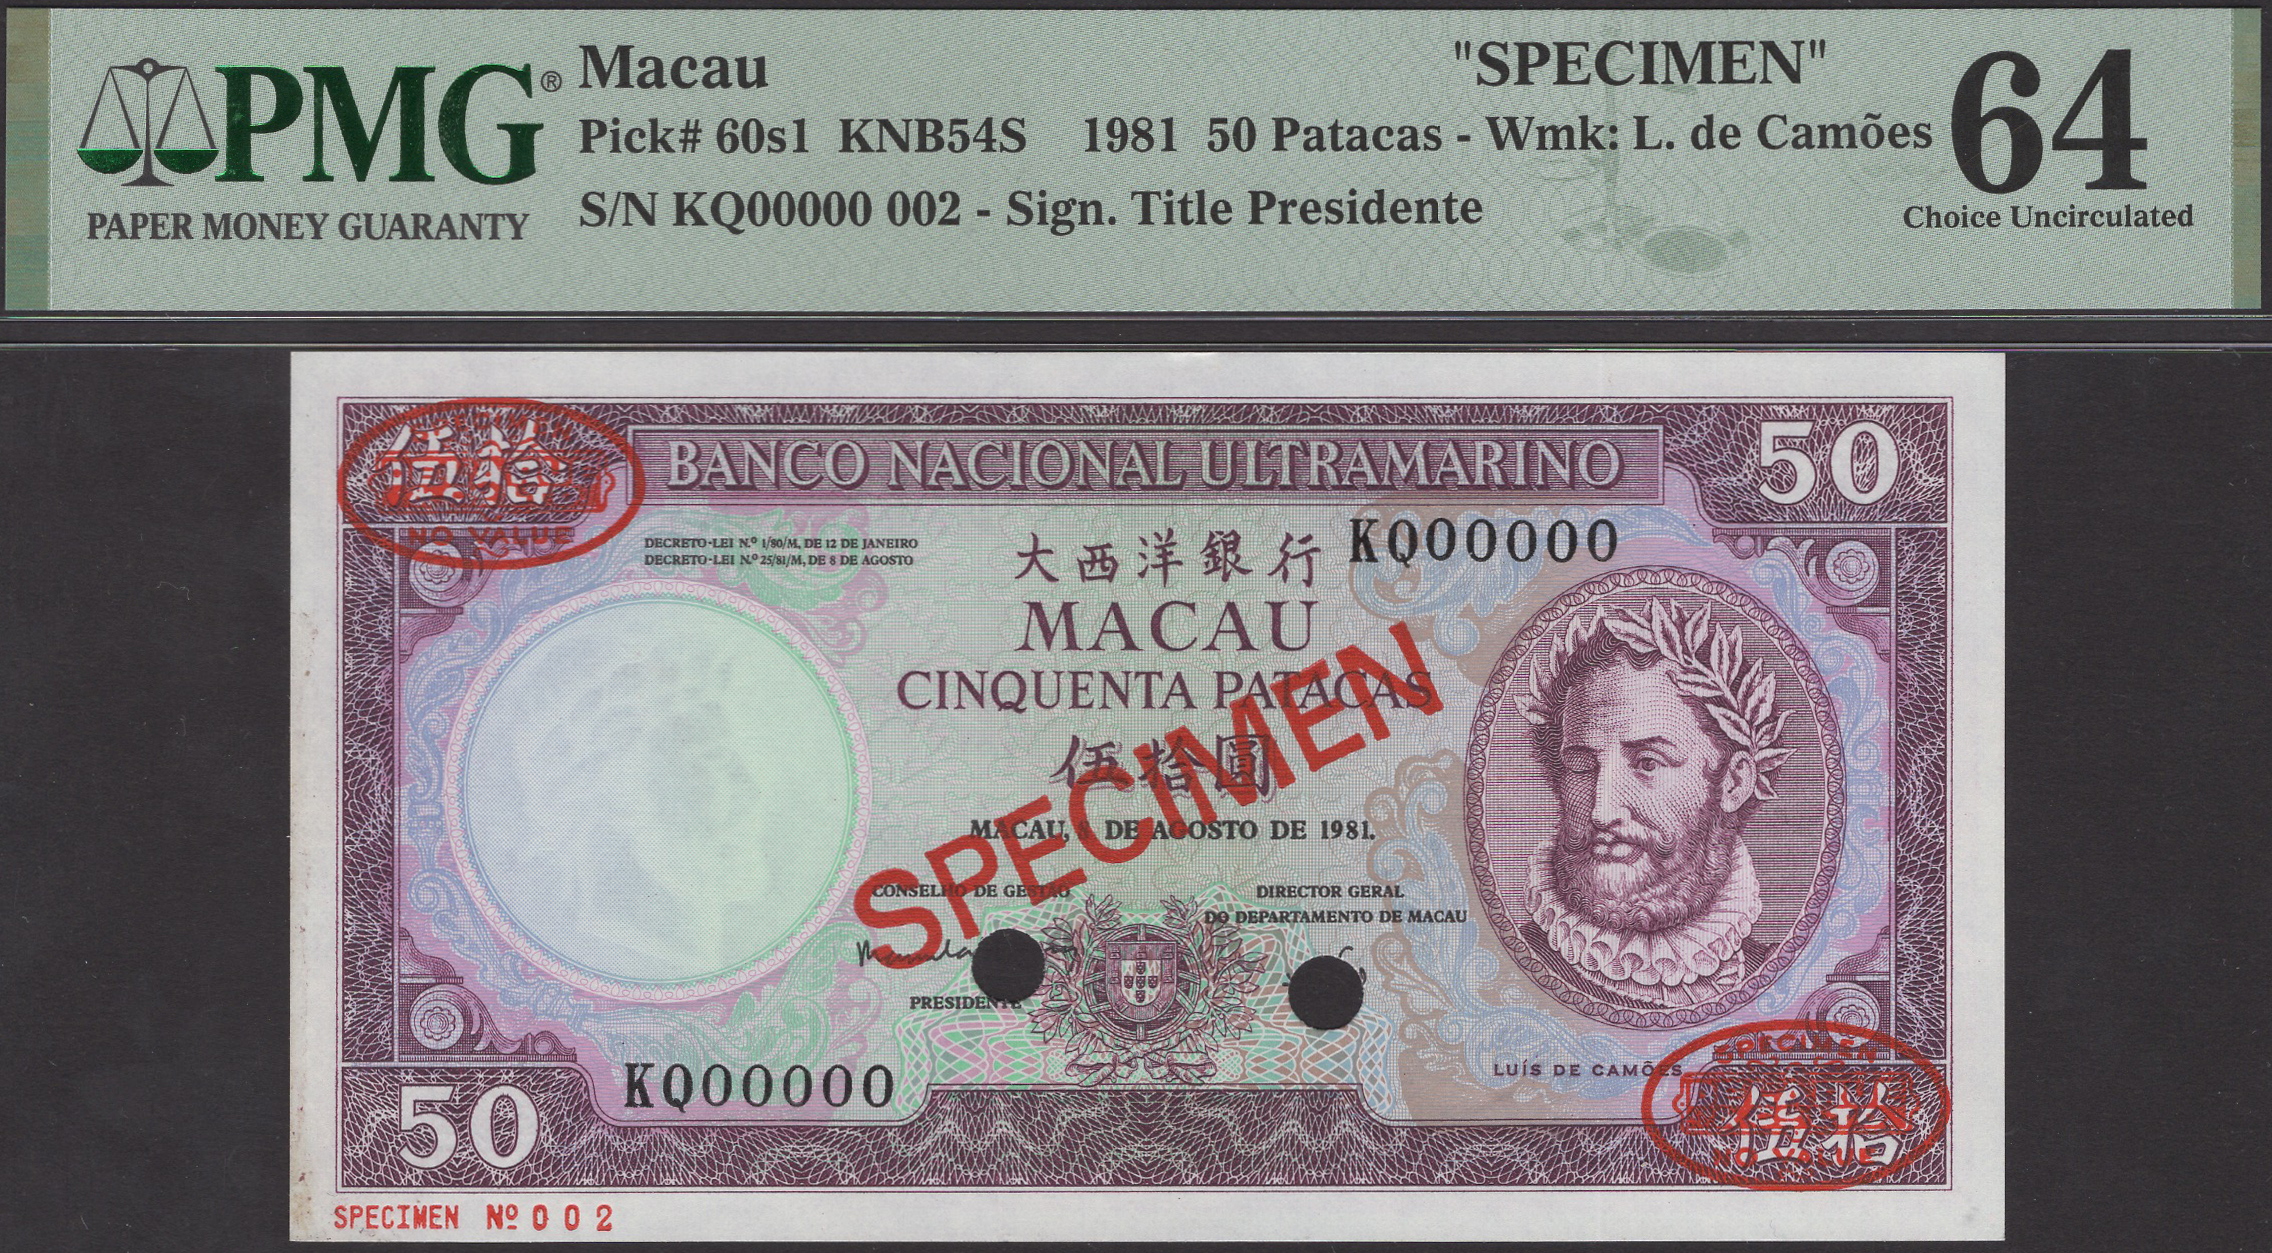 Banco Nacional Ultramarino, Macau, 50 Patacas, 8 August 1981, serial number KQ00000, red...